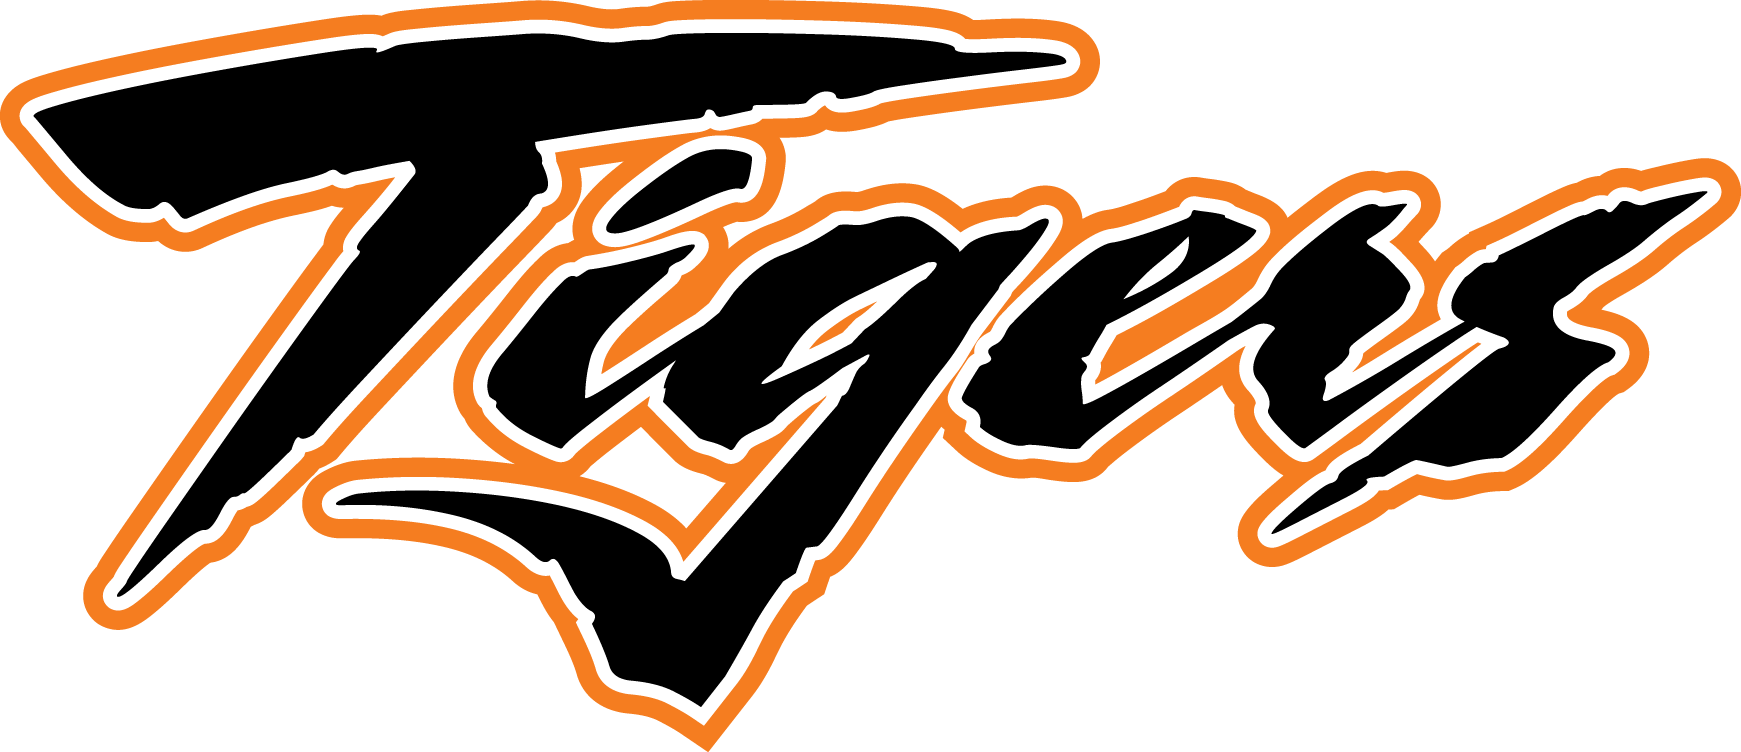 Tiger C Logo - Logos - Princeton School District 477